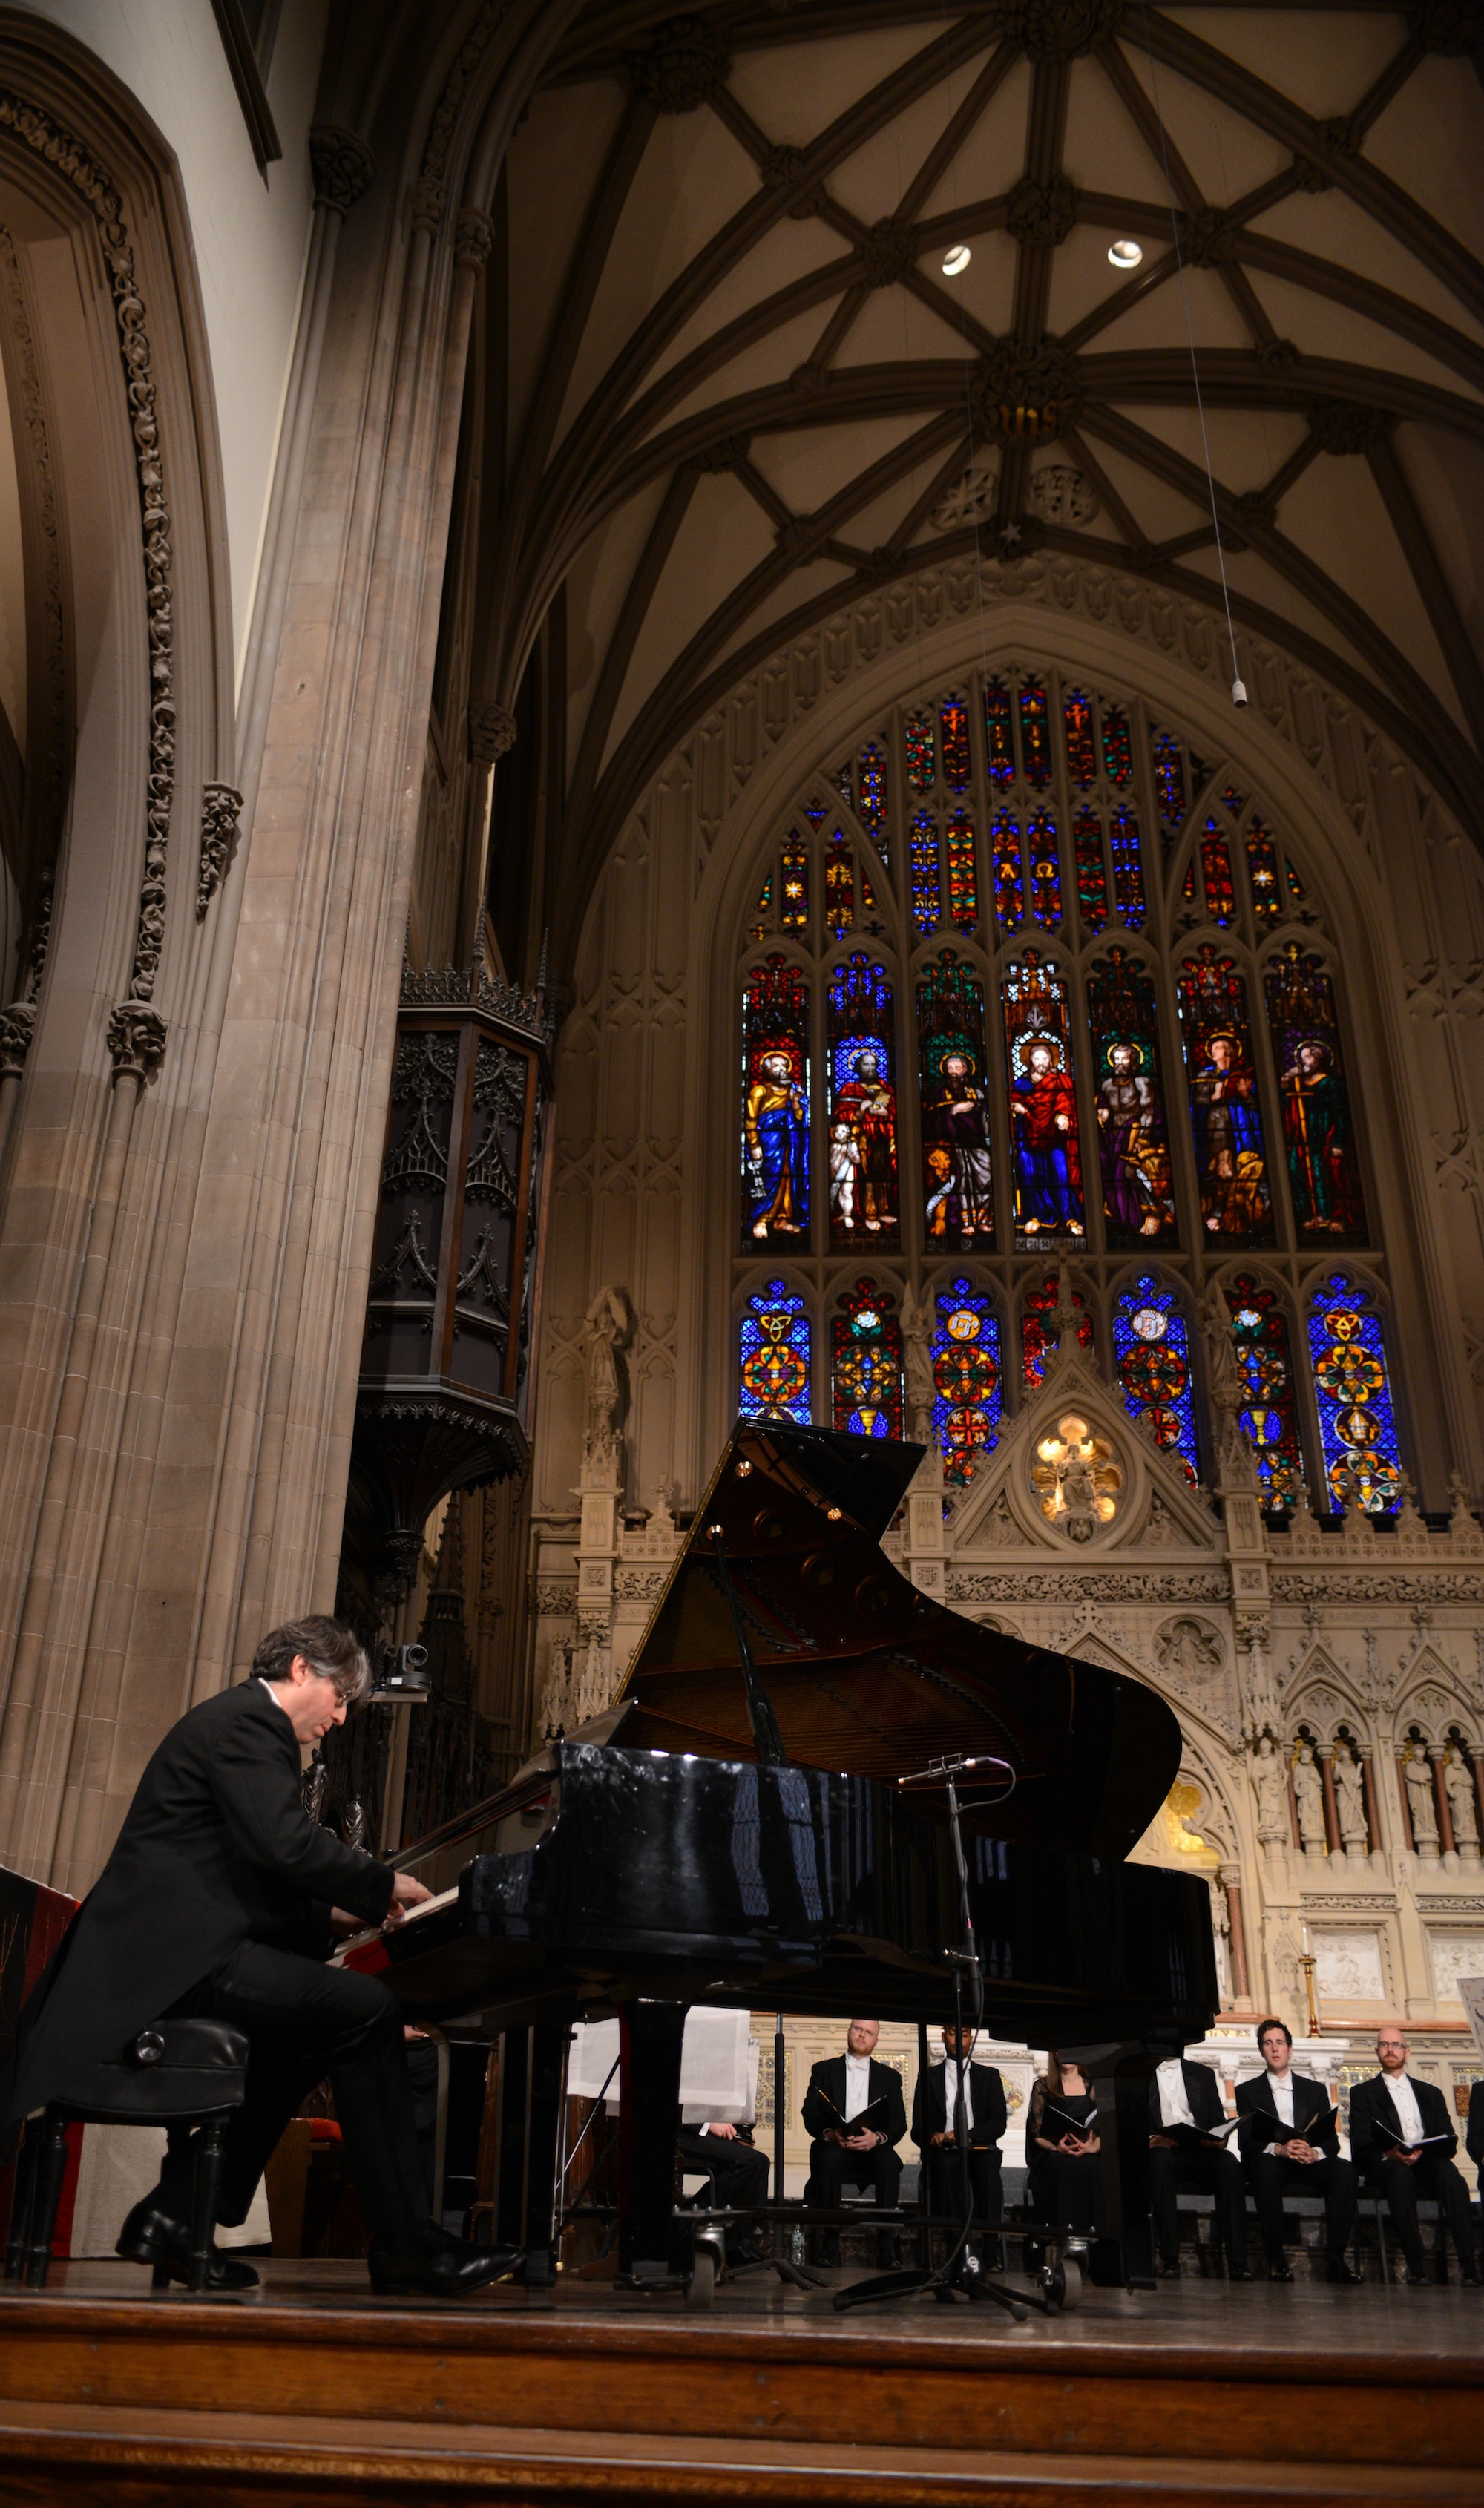 Dr. Julian Wachner plays Yamaha C7X piano during performance at Trinity Wall Street